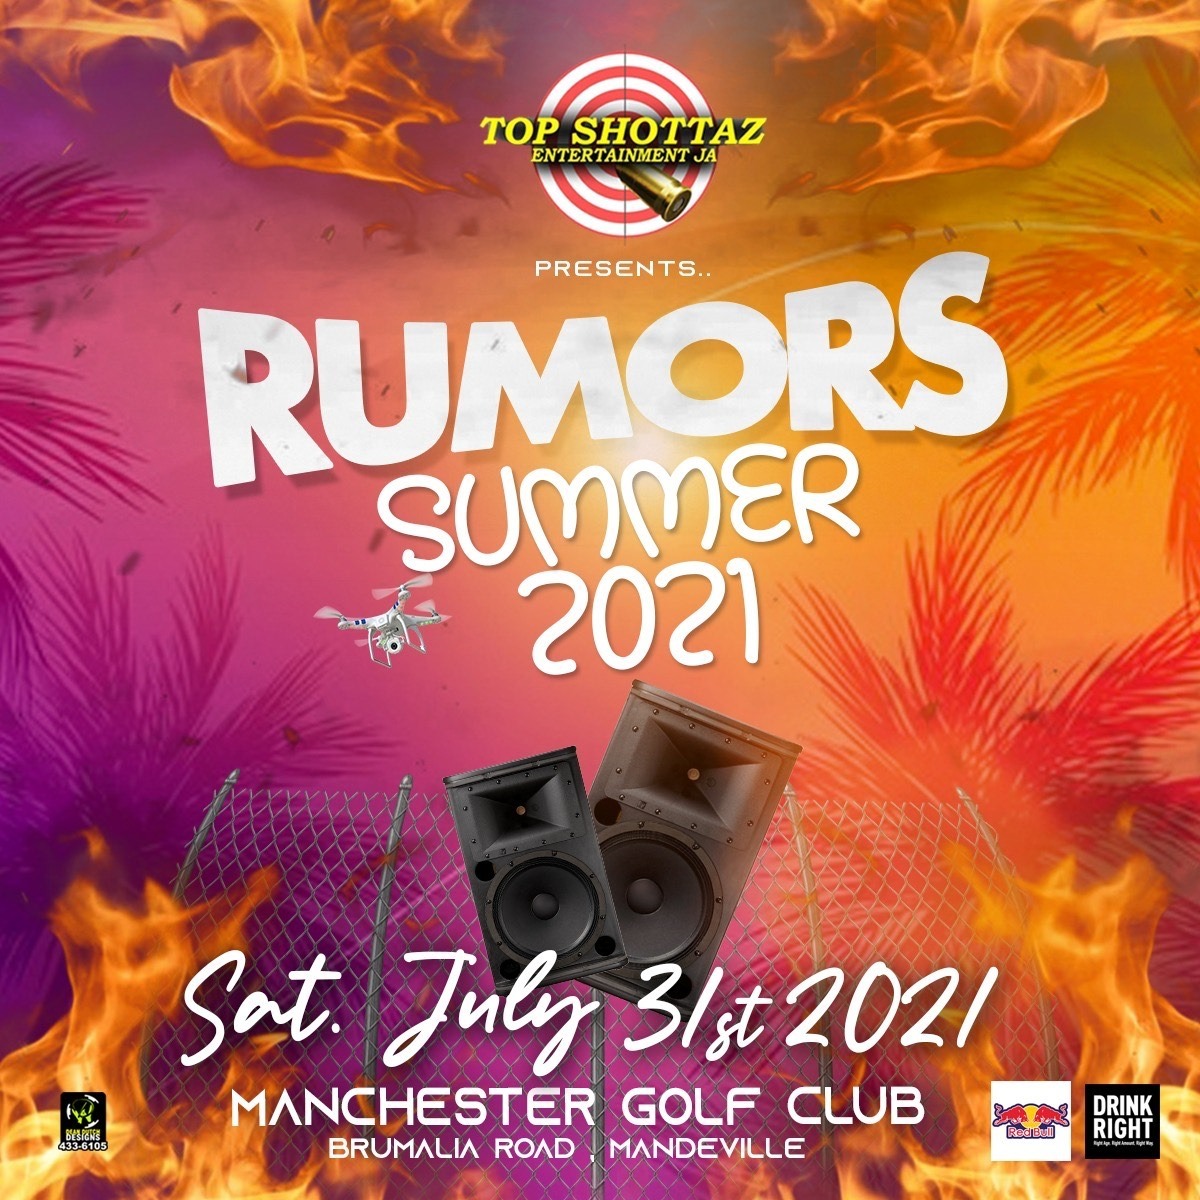 RUMORS SUMMER 2021